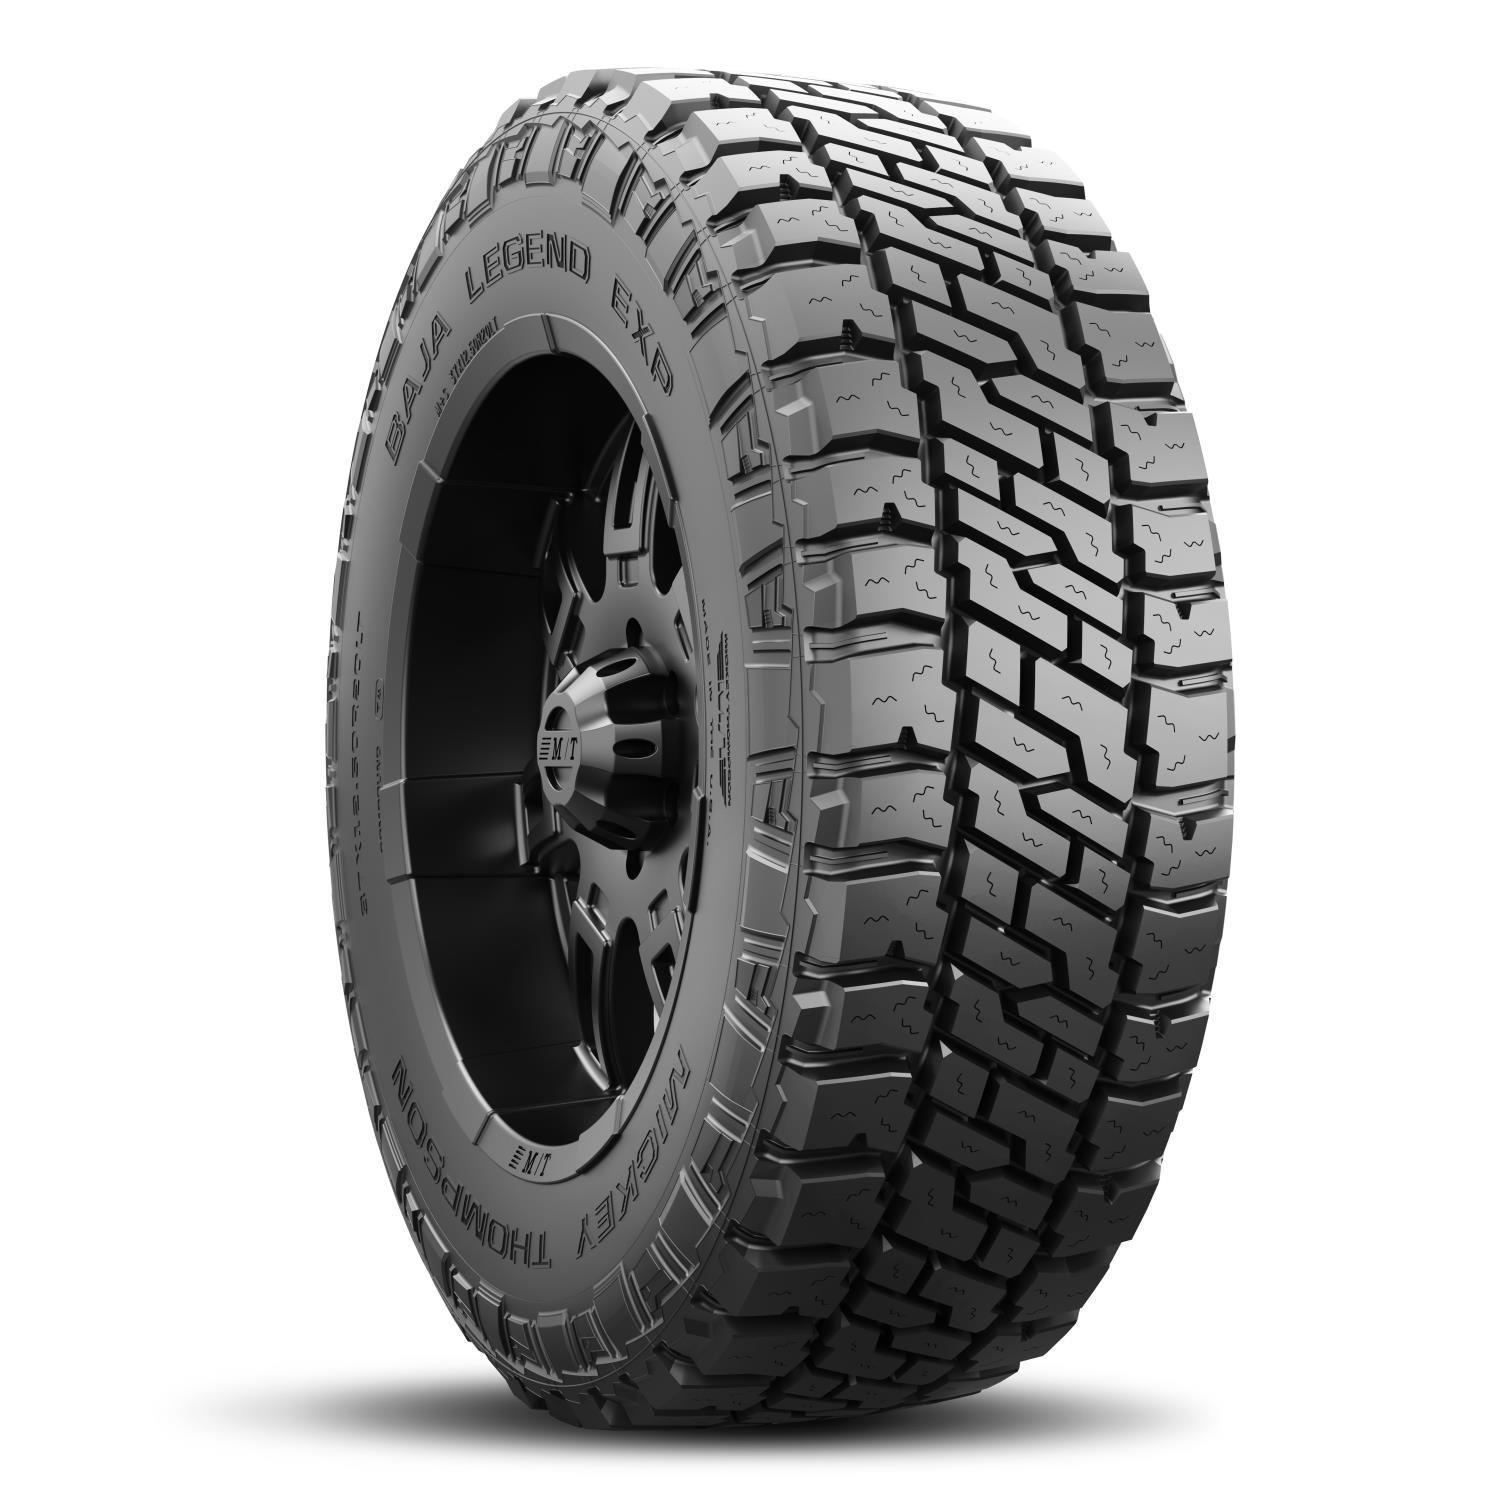 Baja Legend EXP Tire LT265/60R18